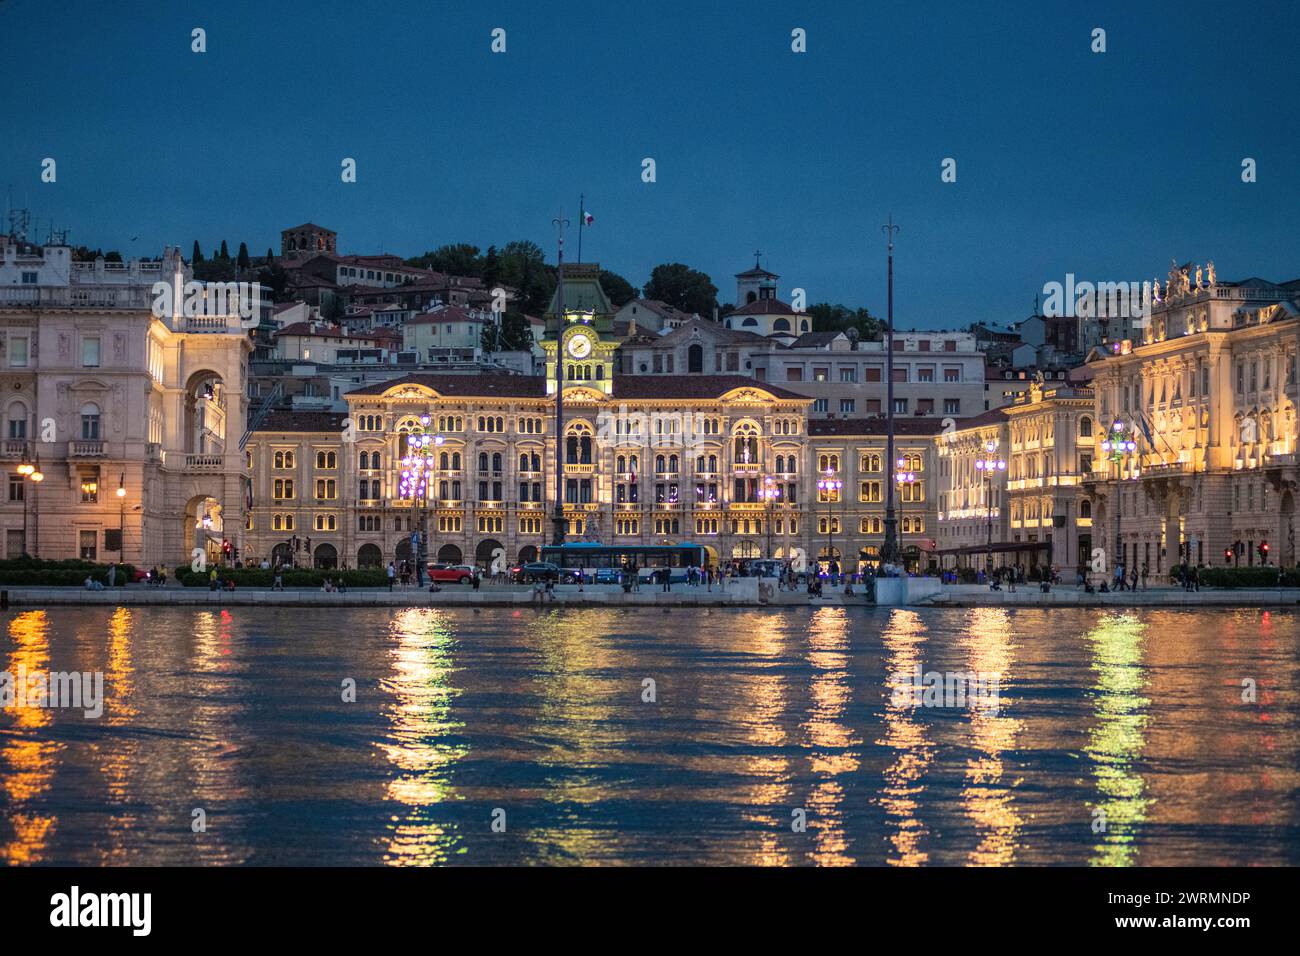 Trieste: Unity of Italy Square (Piazza Unita d' Italia) by night. Italy Stock Photo